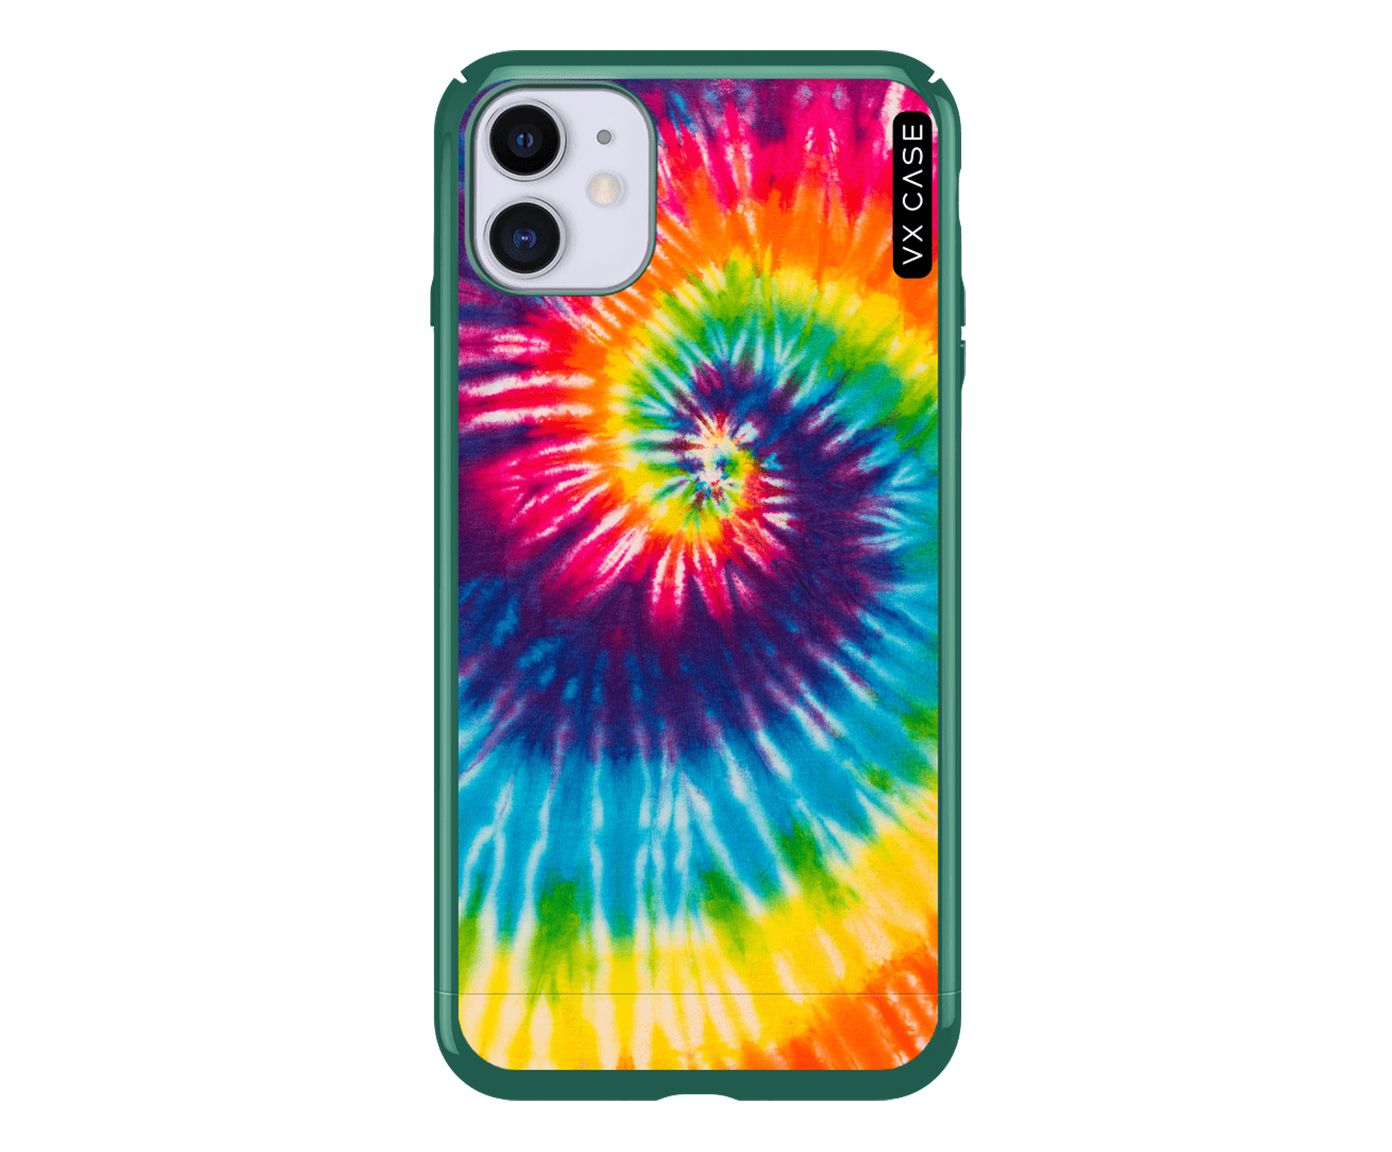 Capa Envernizada Vx Case Iphone 11 Rainbow Tie Dye | Westwing.com.br